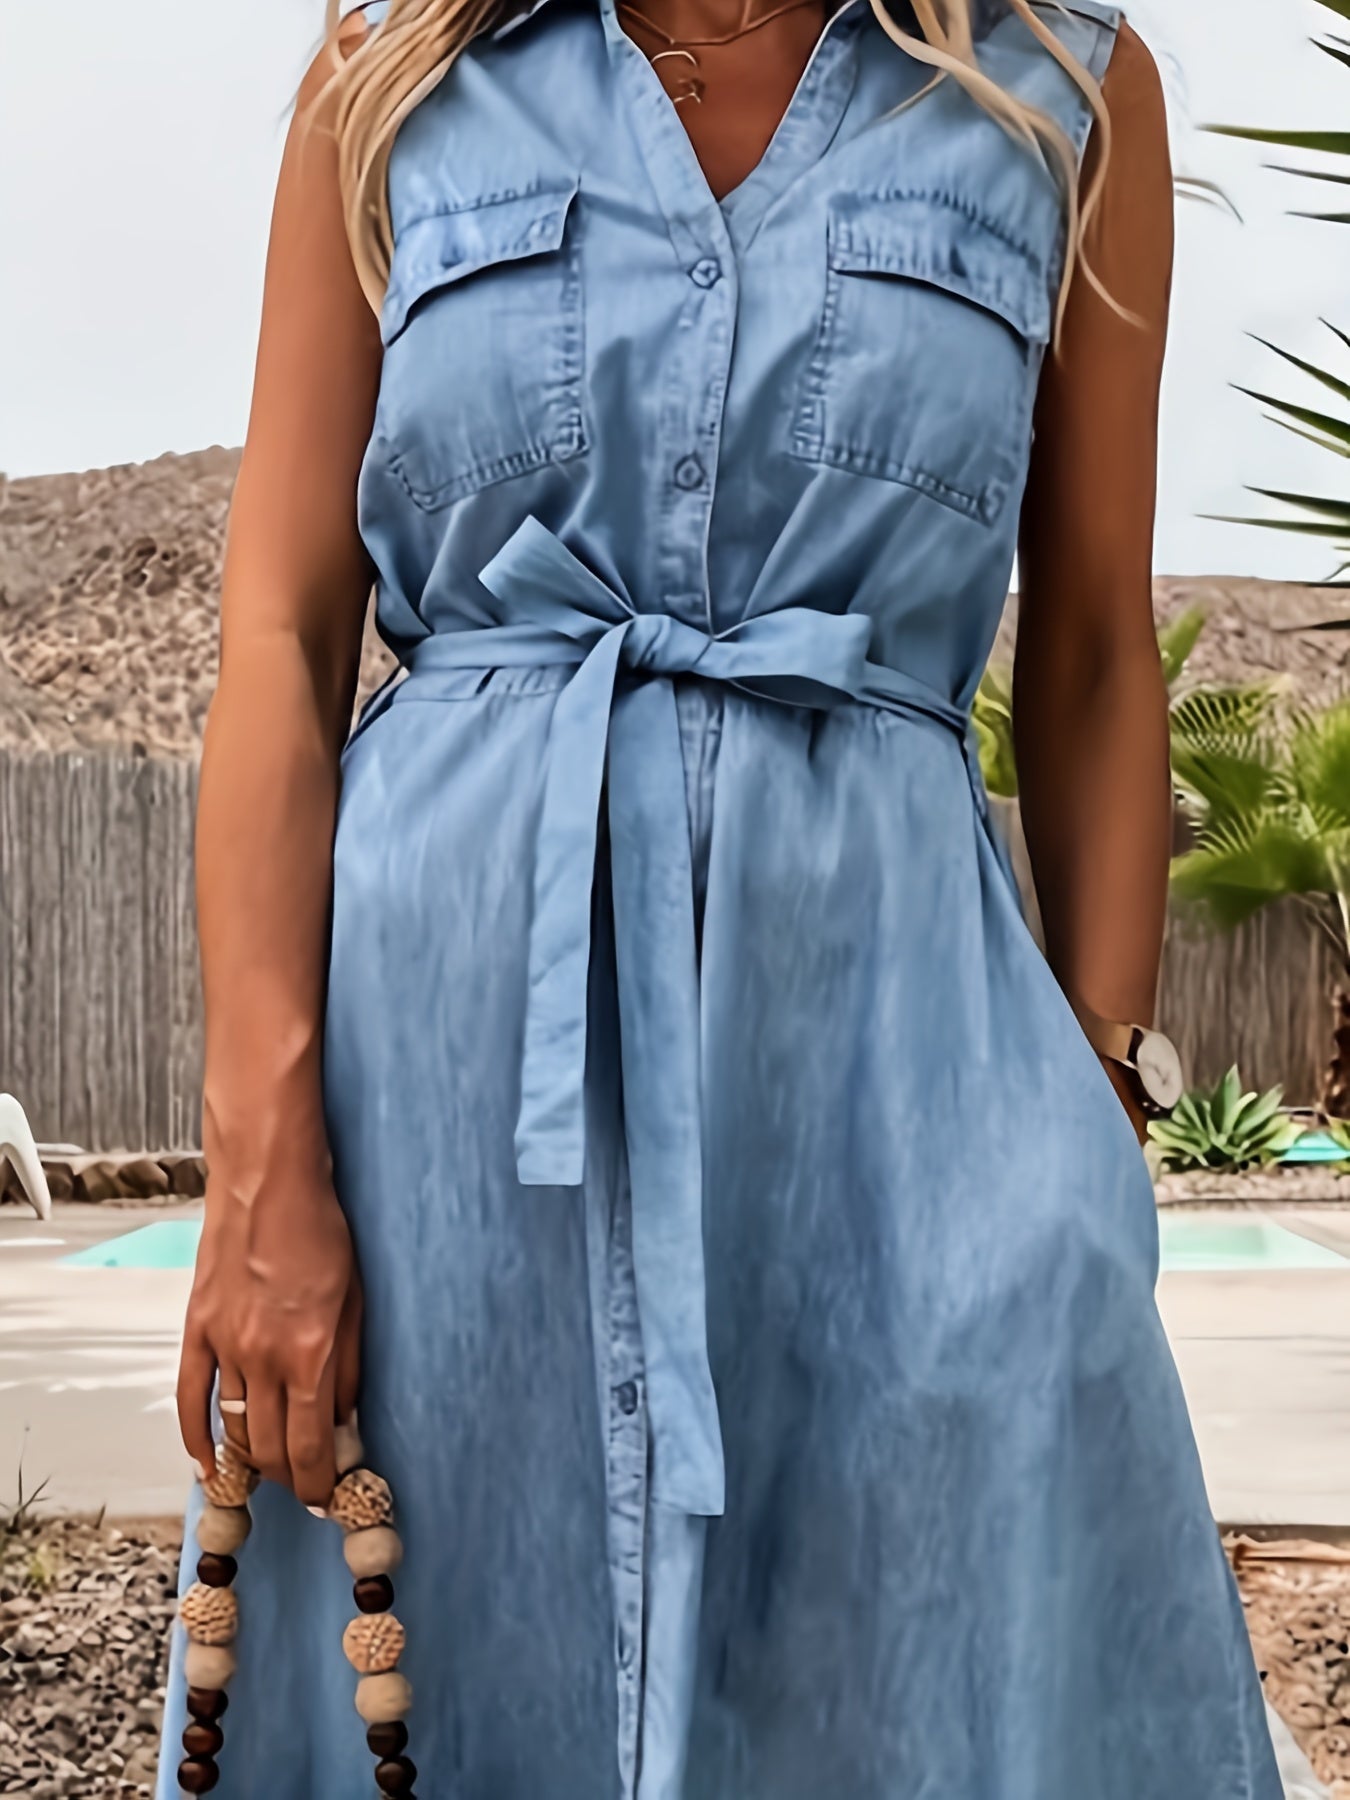 Lovevop-Blue Sleeveless Lapel Denim Dress, Single-Breasted Button Flap Pockets With Waistband Denim Dress, Women's Denim Clothing